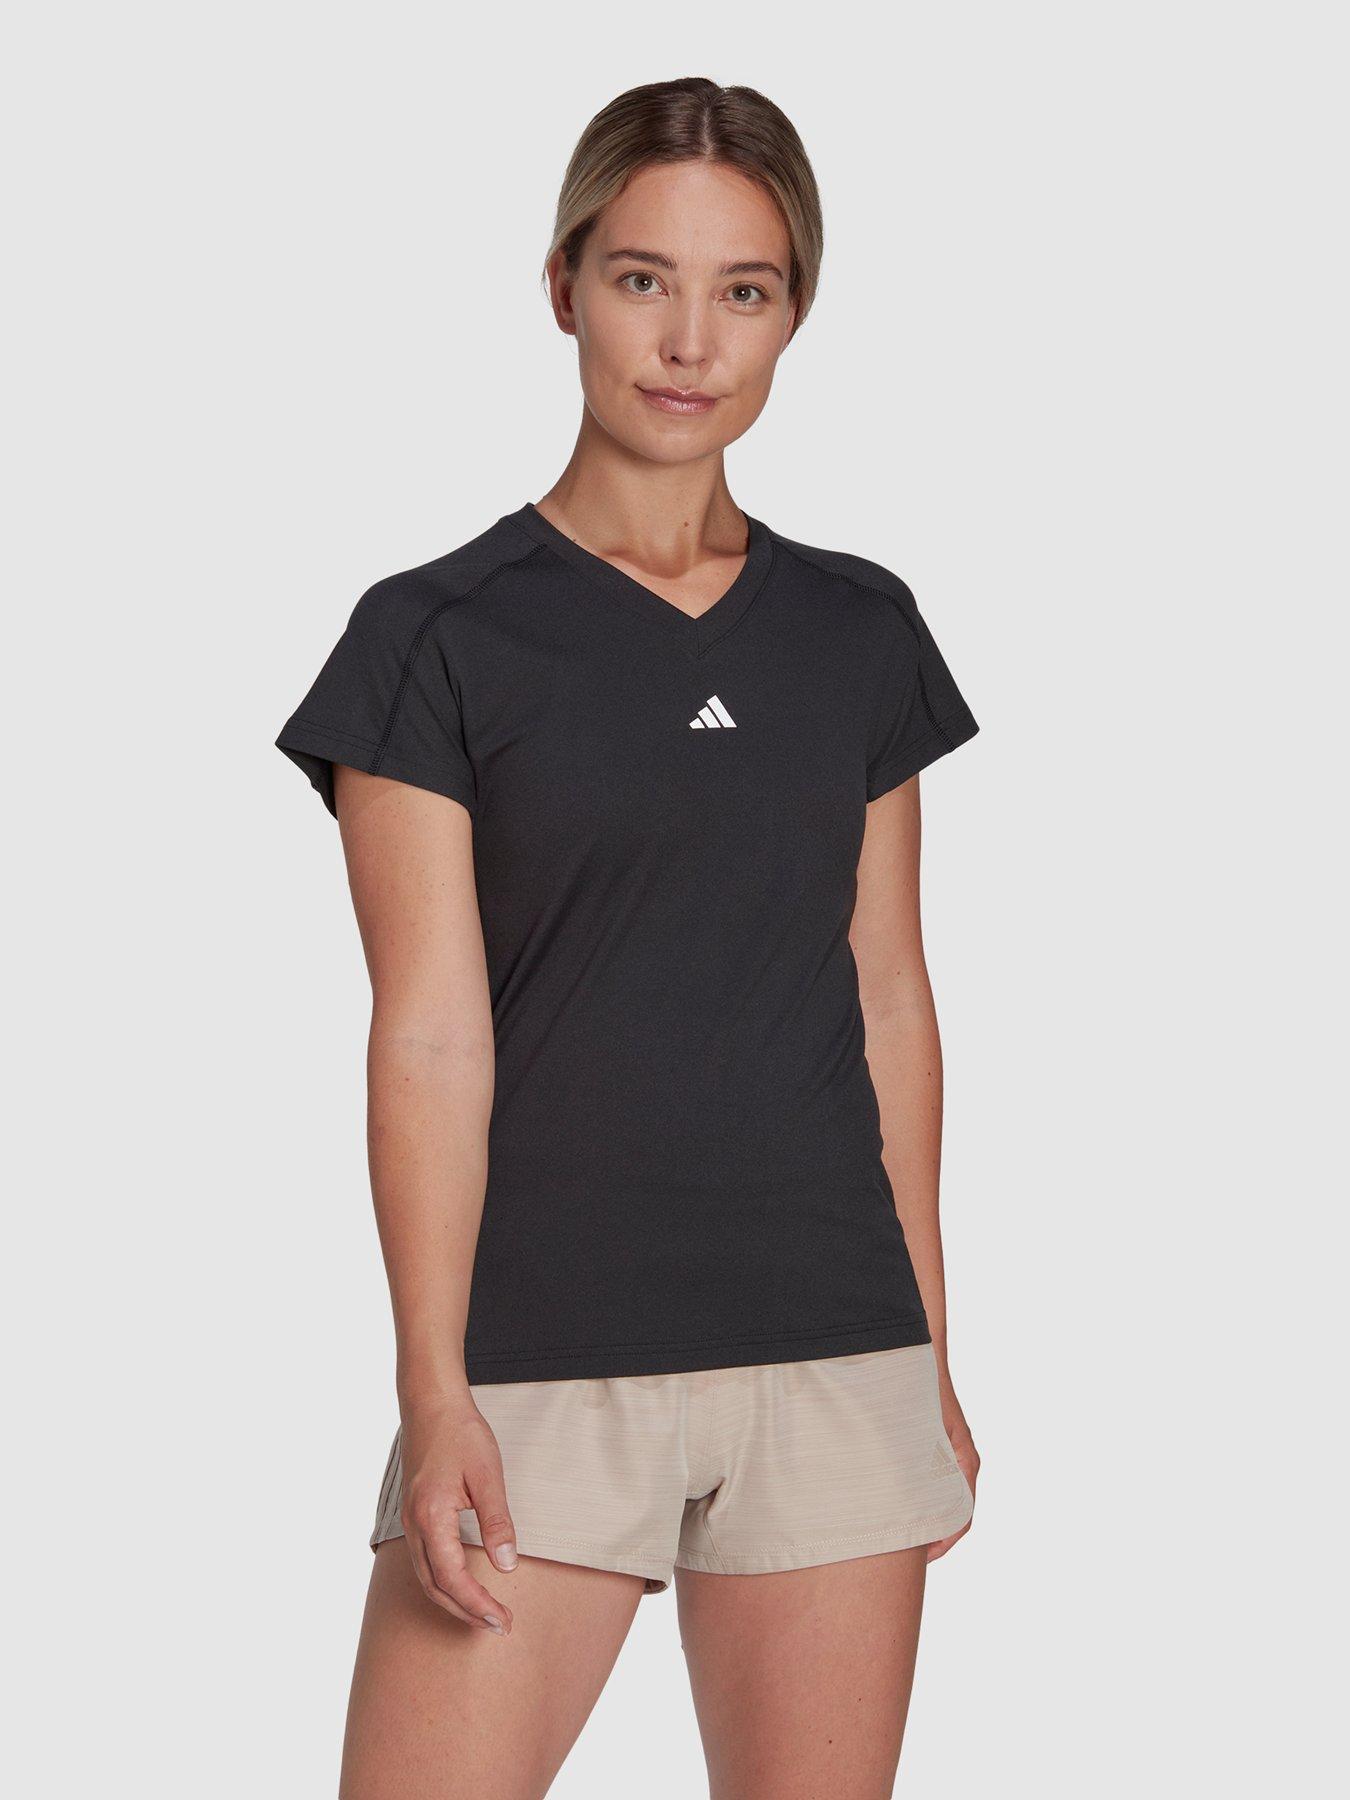 adidas Performance Aeroready Train Essentials Minimal Branding V-neck T-shirt - Black, Black, Size S, Women